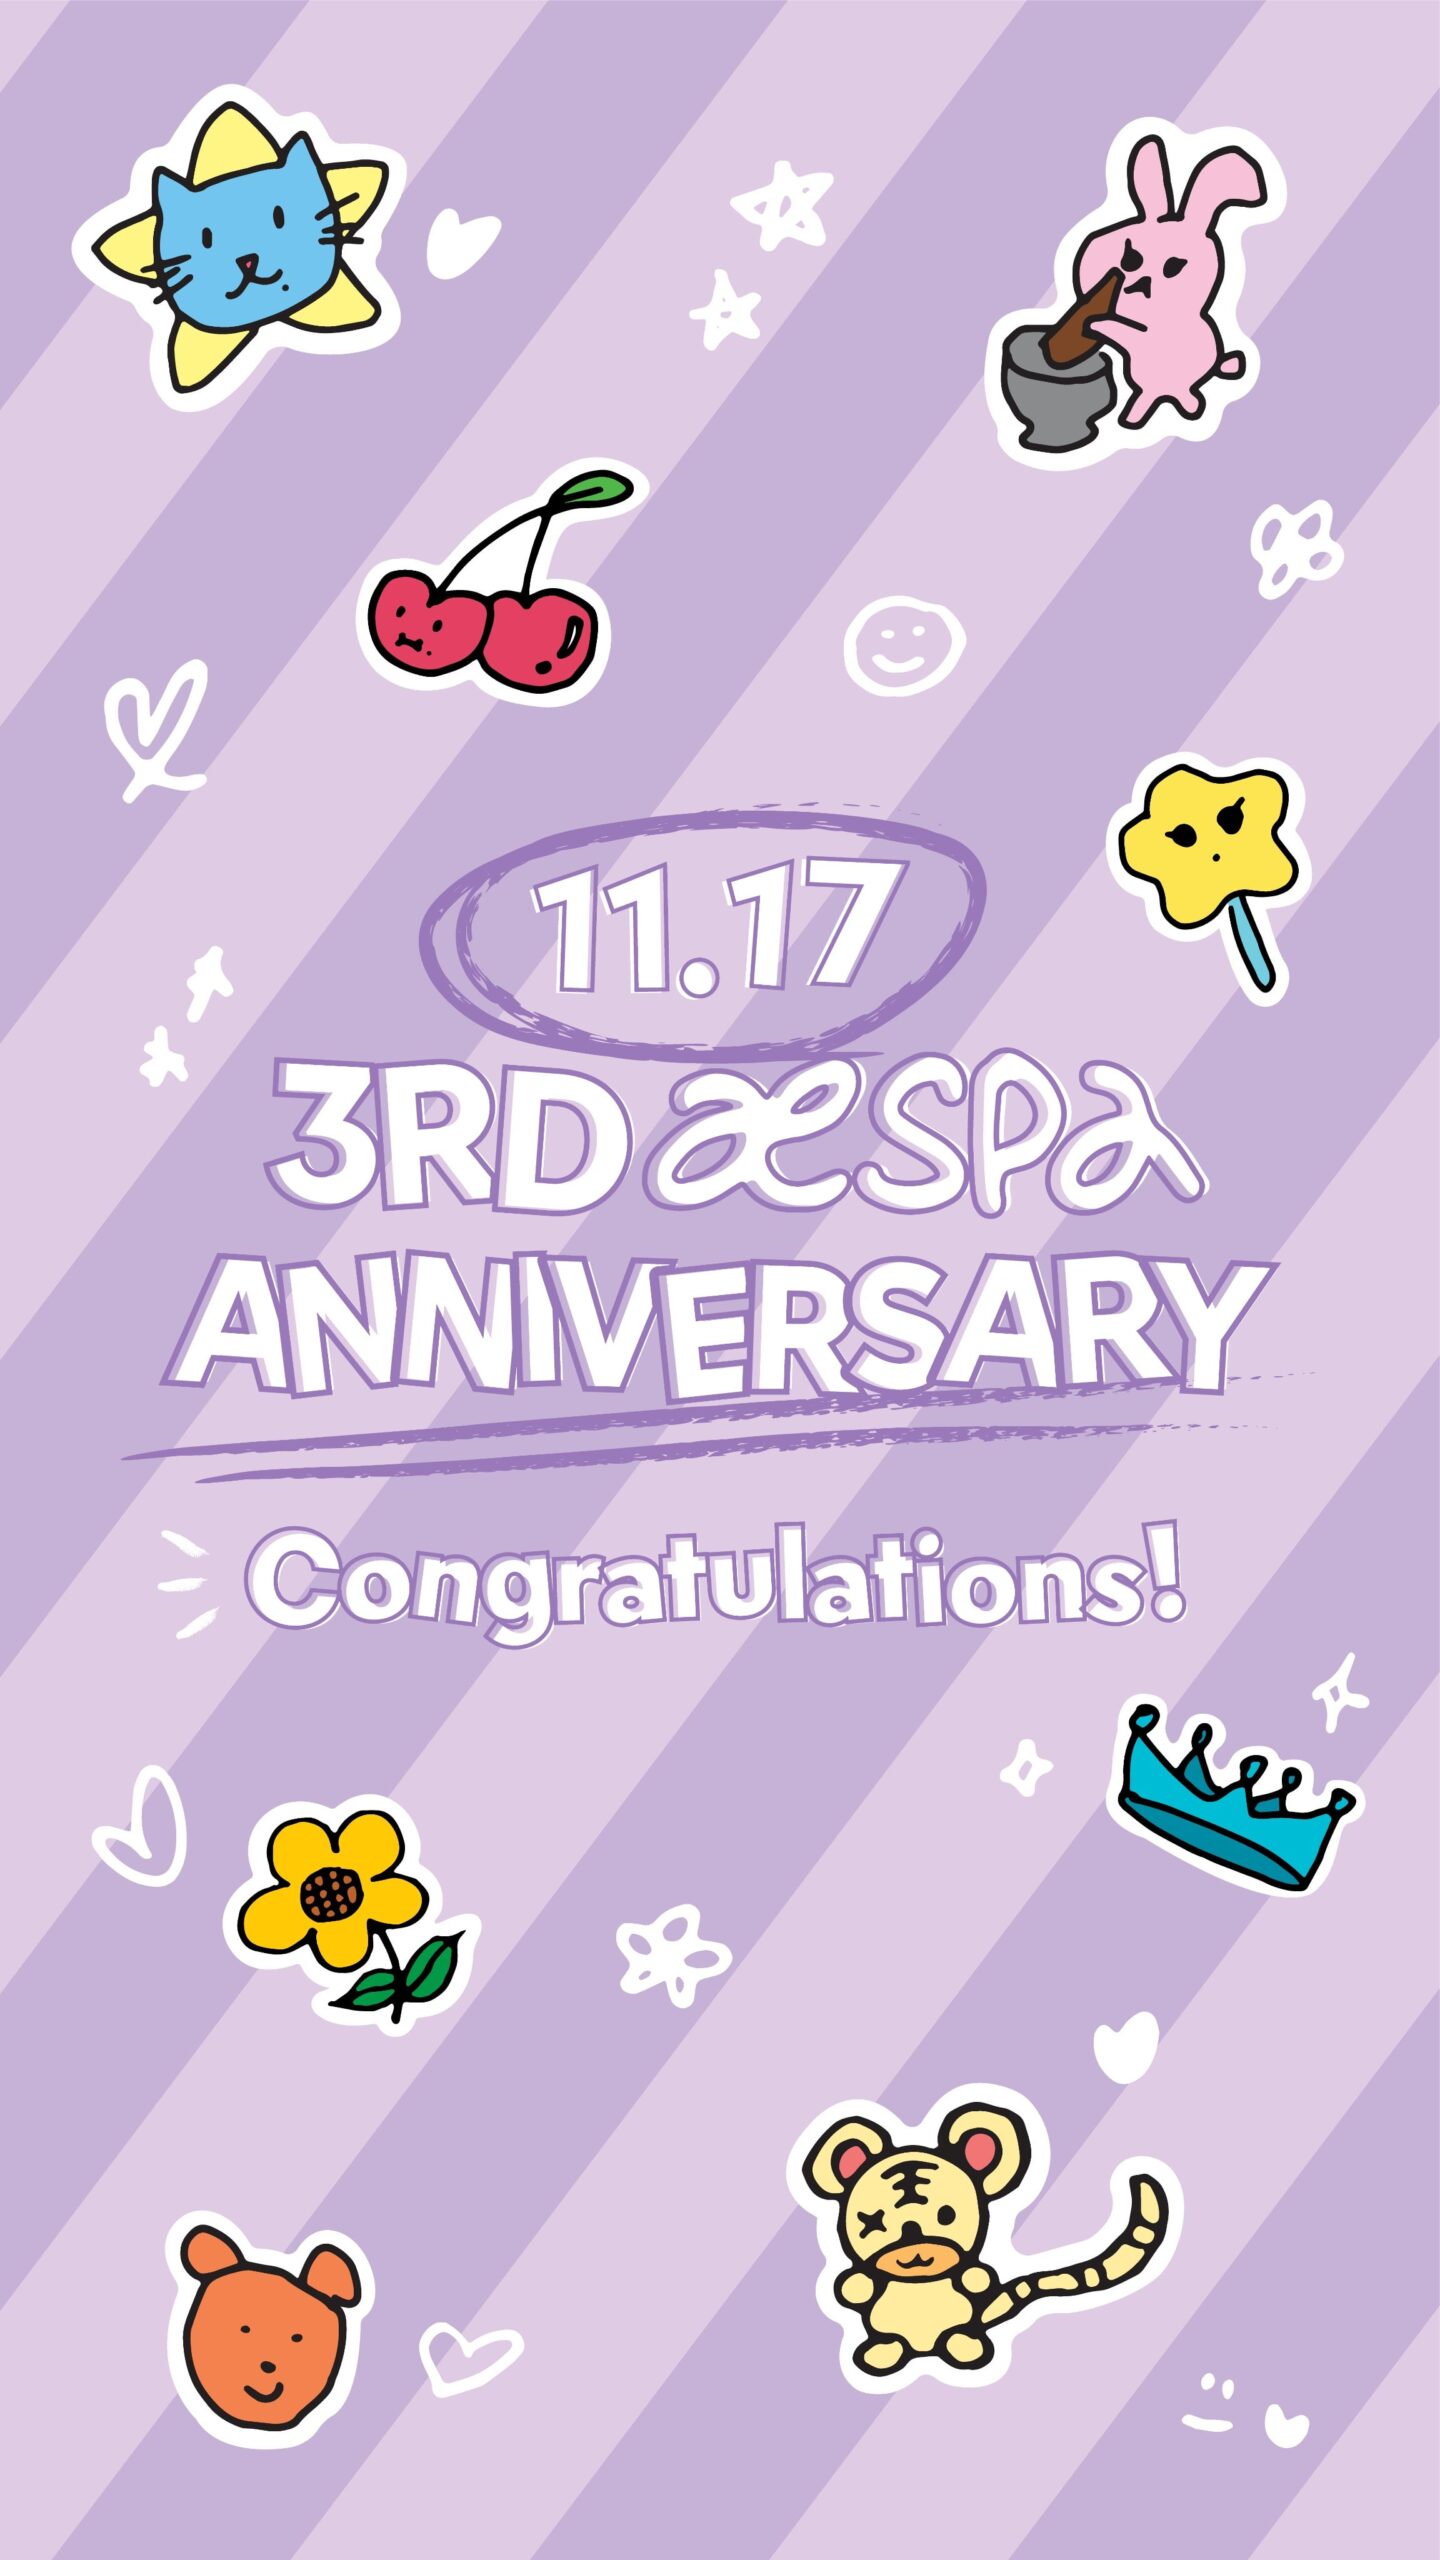 231117 aespa Twitter Update - aespa Debut 3rd Anniversary 11.17 Congratulations!